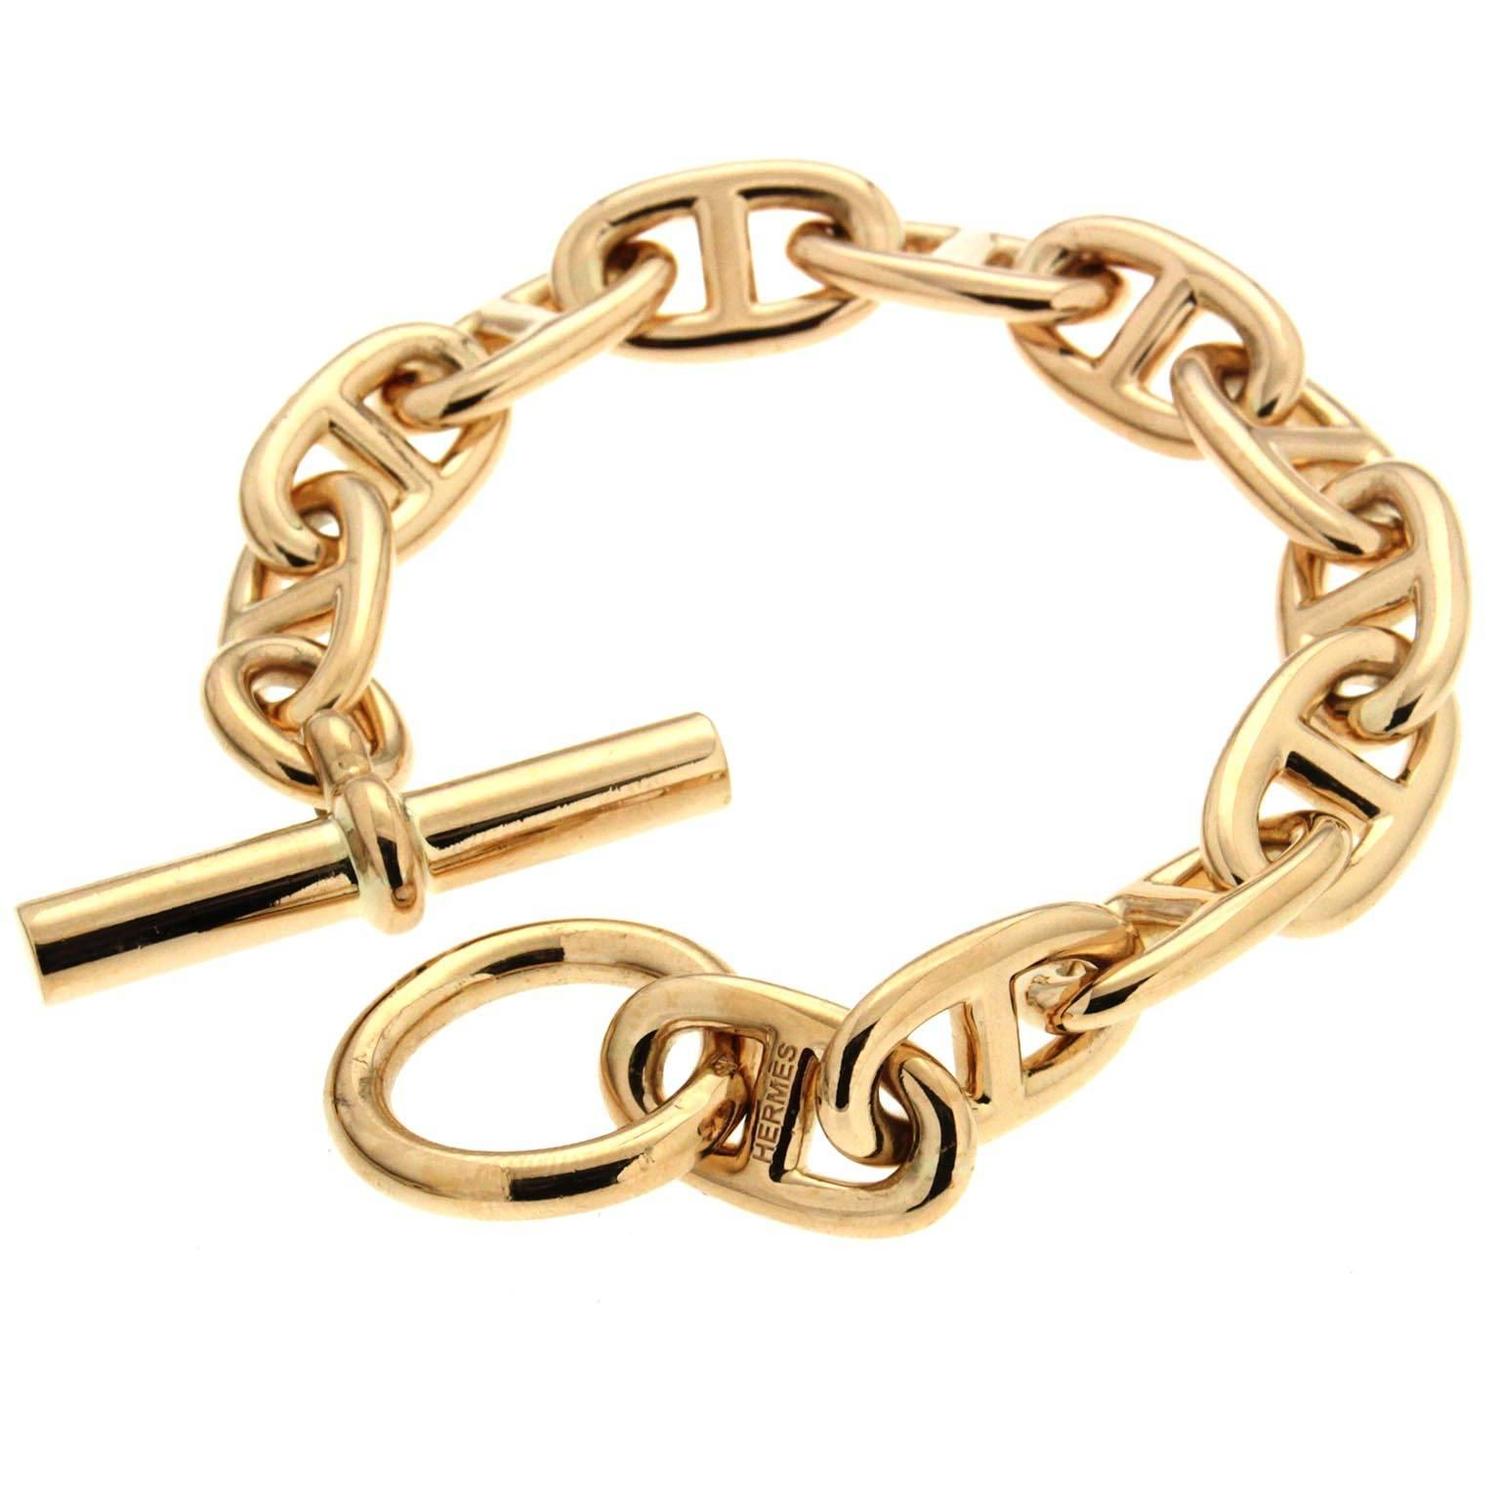 Hermes Gold Anchor Chain Toggle Bracelet at 1stdibs